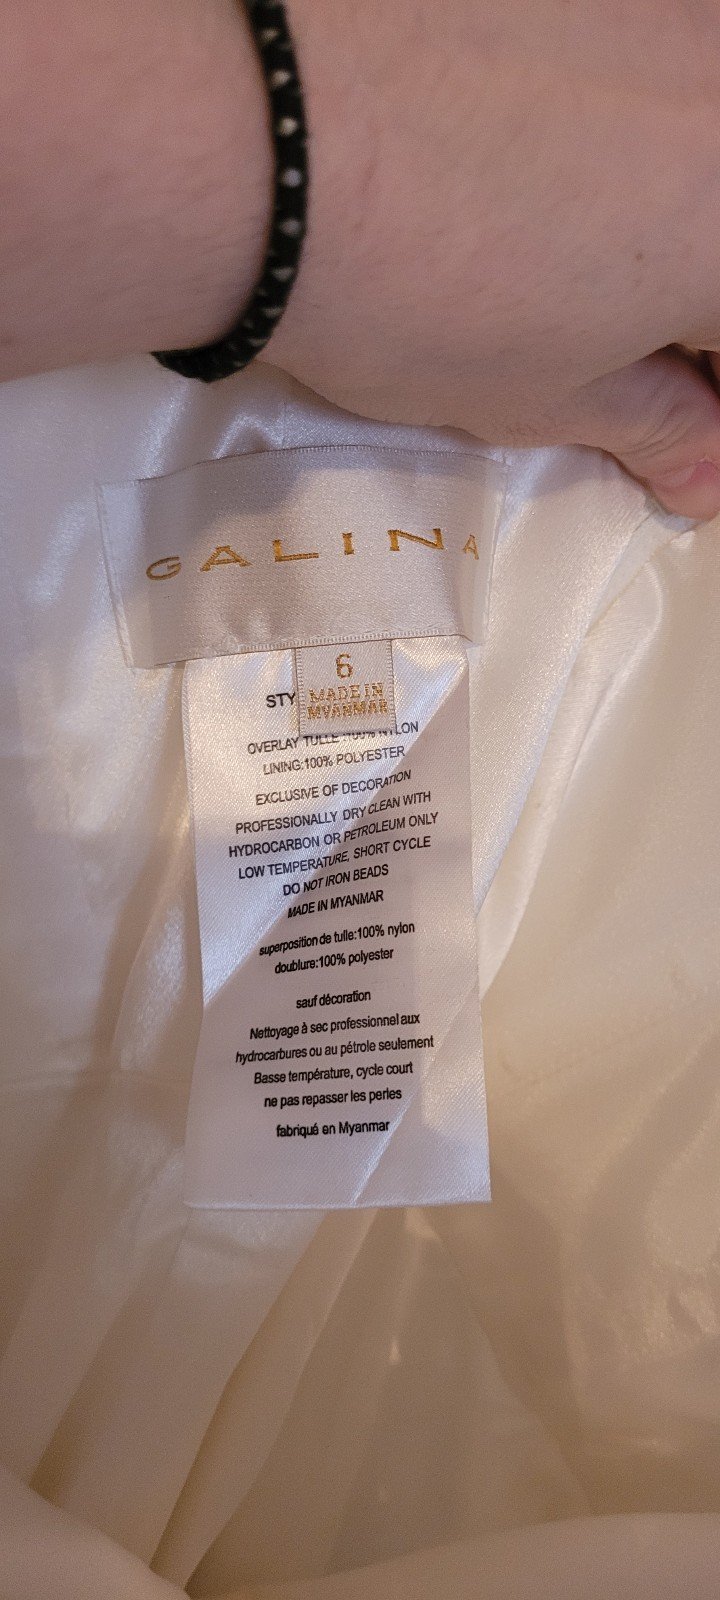 Great Galina Size 6 Ivory Floorlength Strapless Wedding Dress HVrnrlNO3 outlet online shop